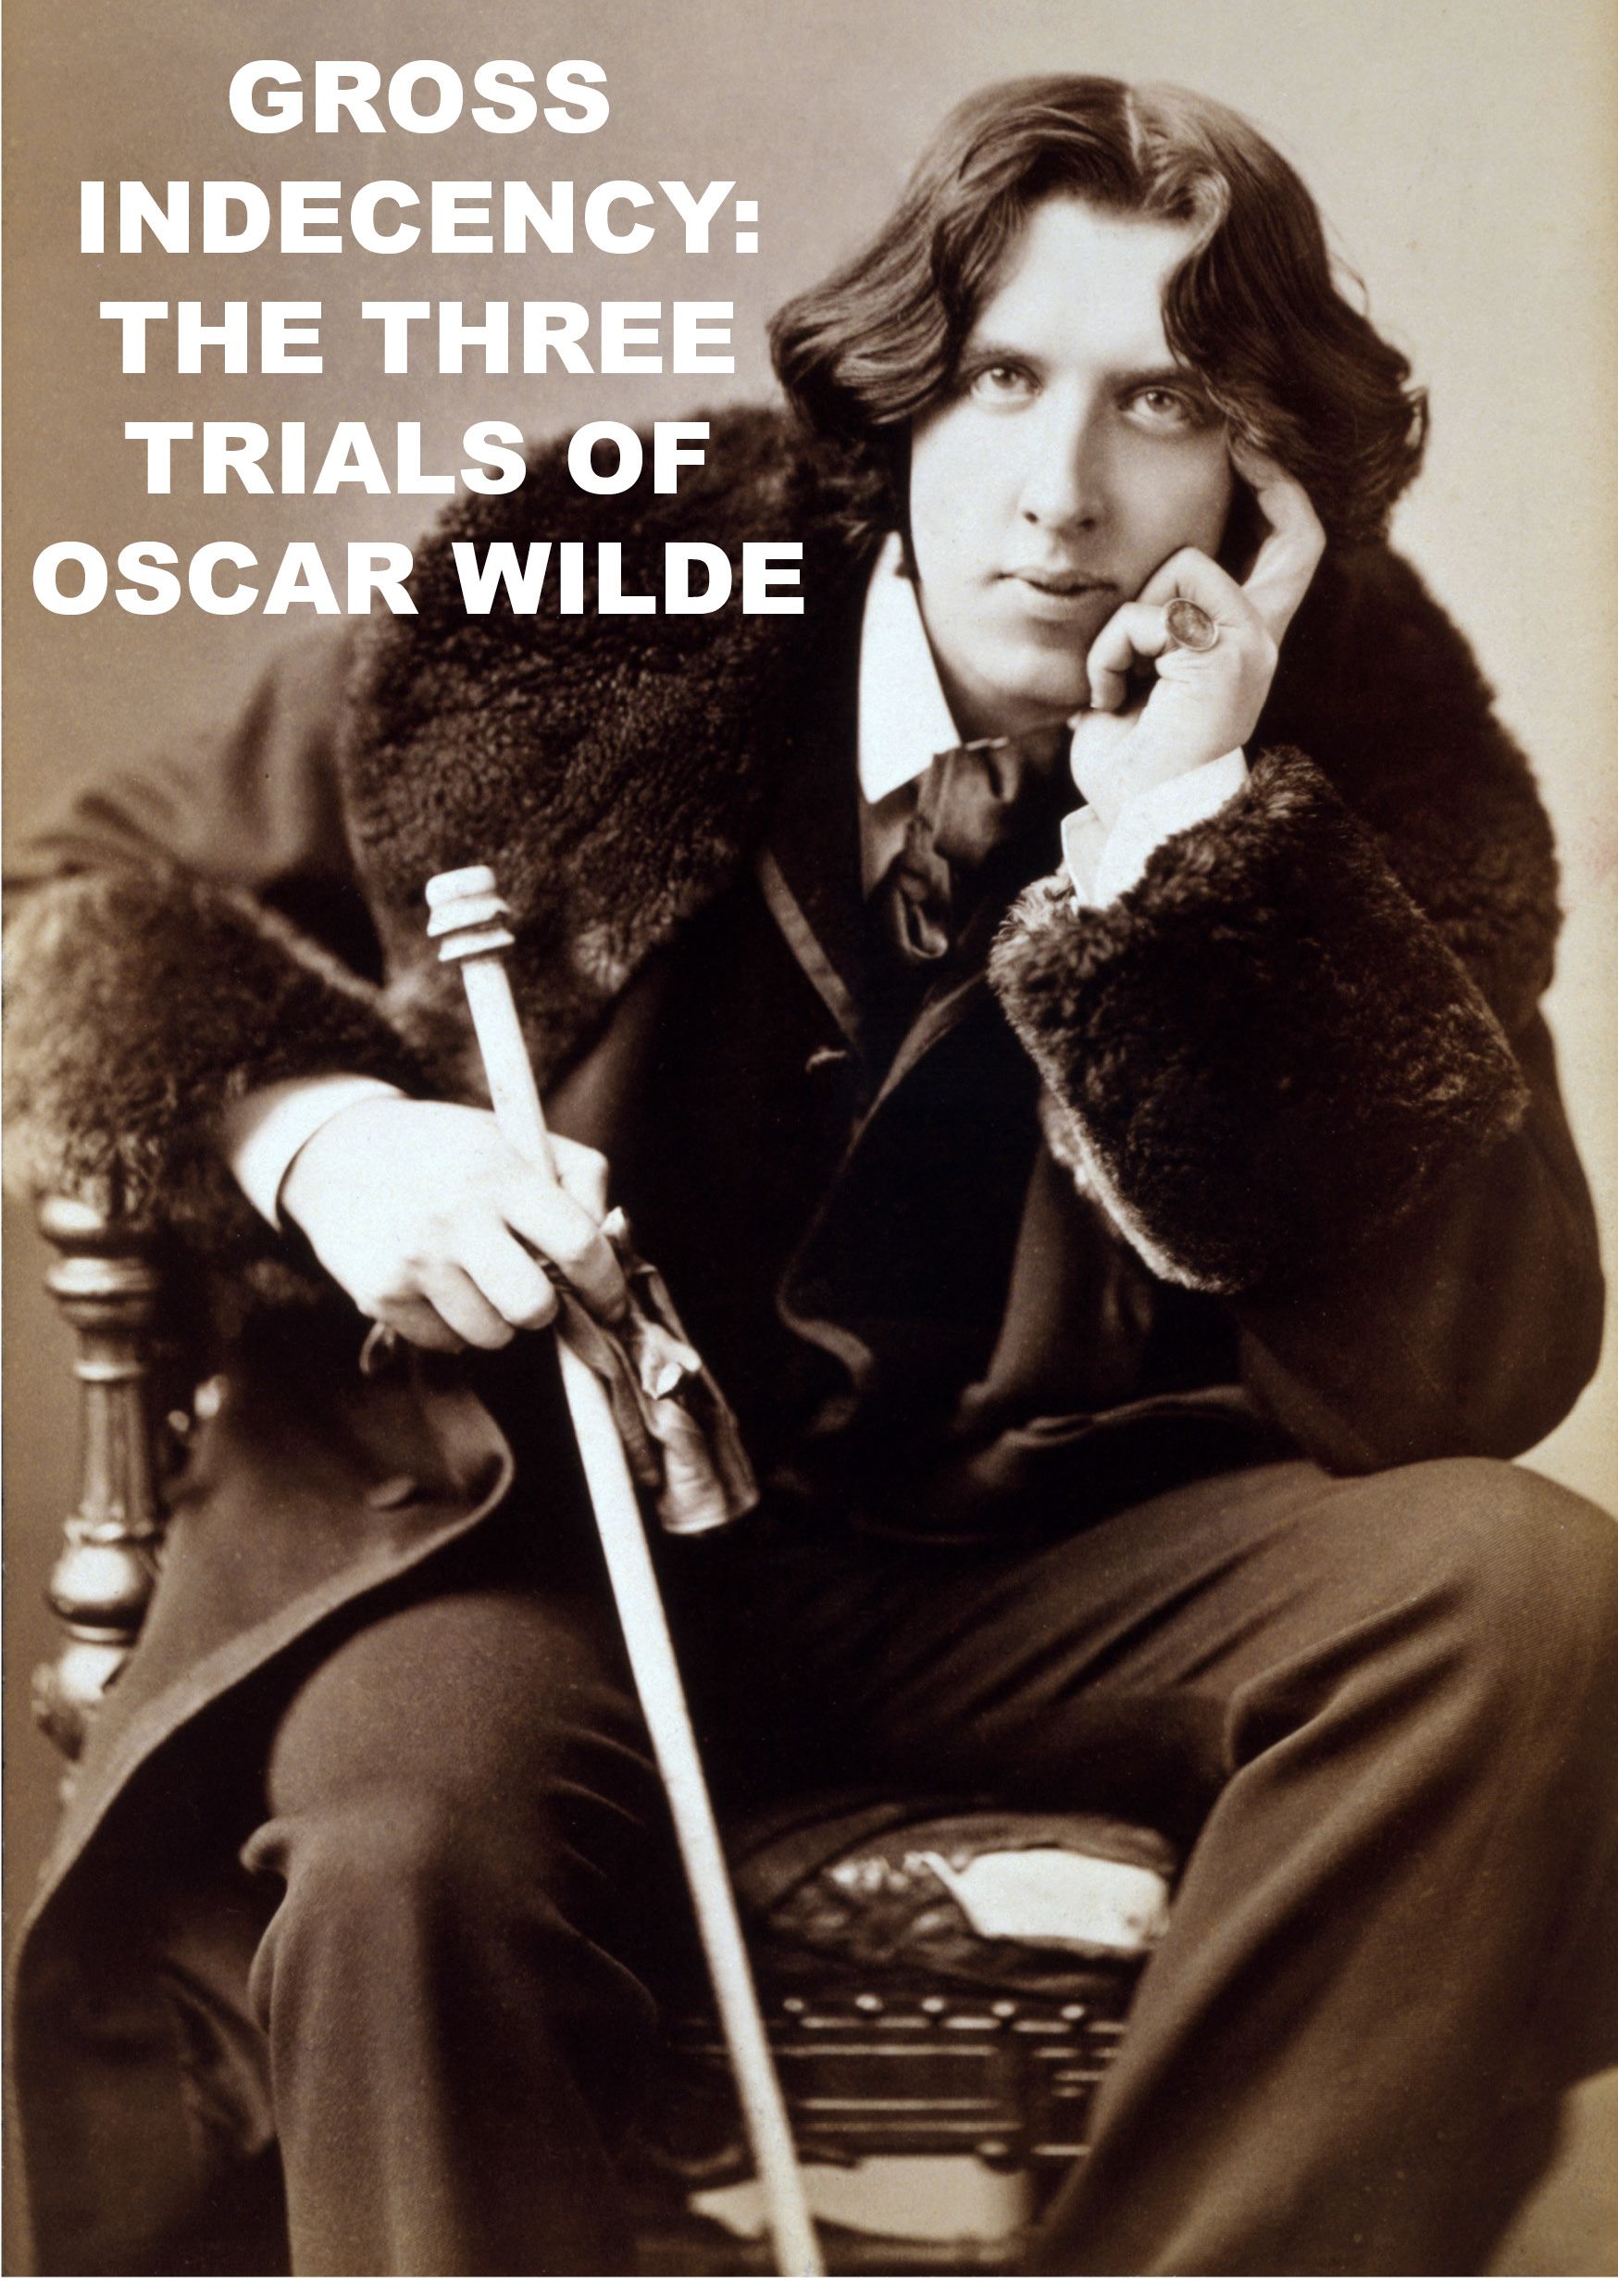   Gross Indecency: The Three Trials of Oscar Wilde flyer image